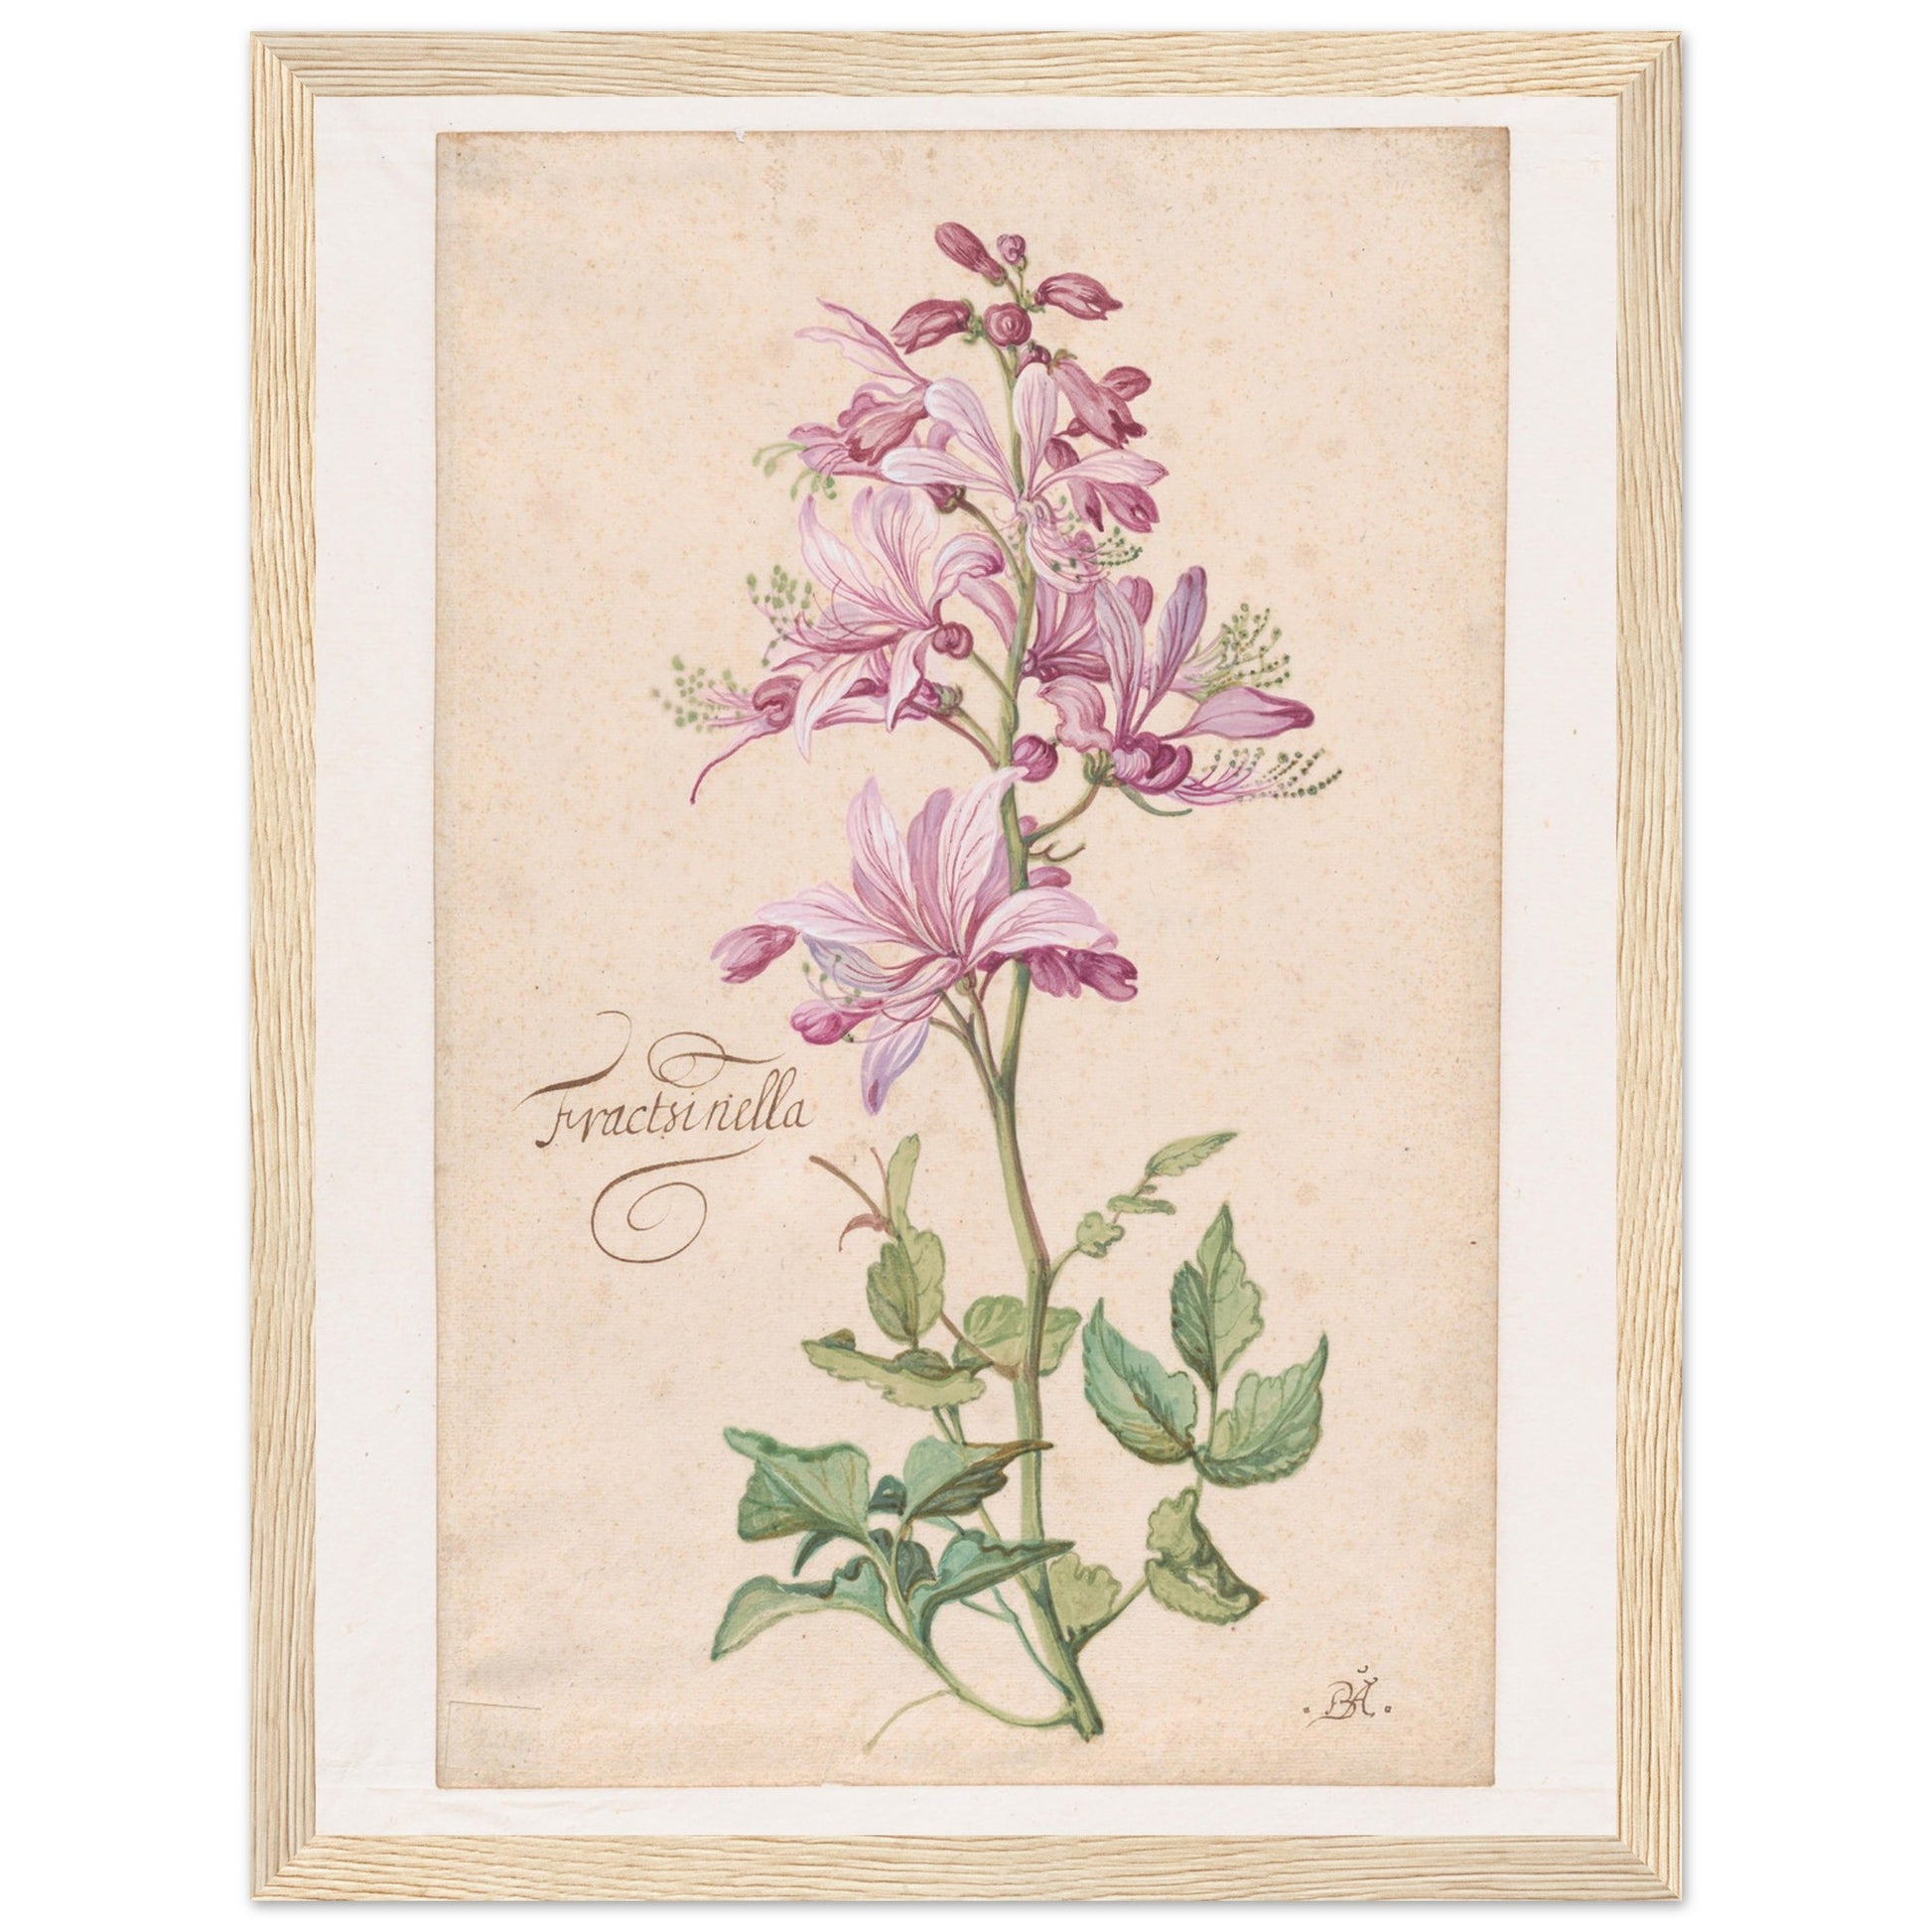 Dictamnus Flower art print in a wood frame | By Print Room Ltd